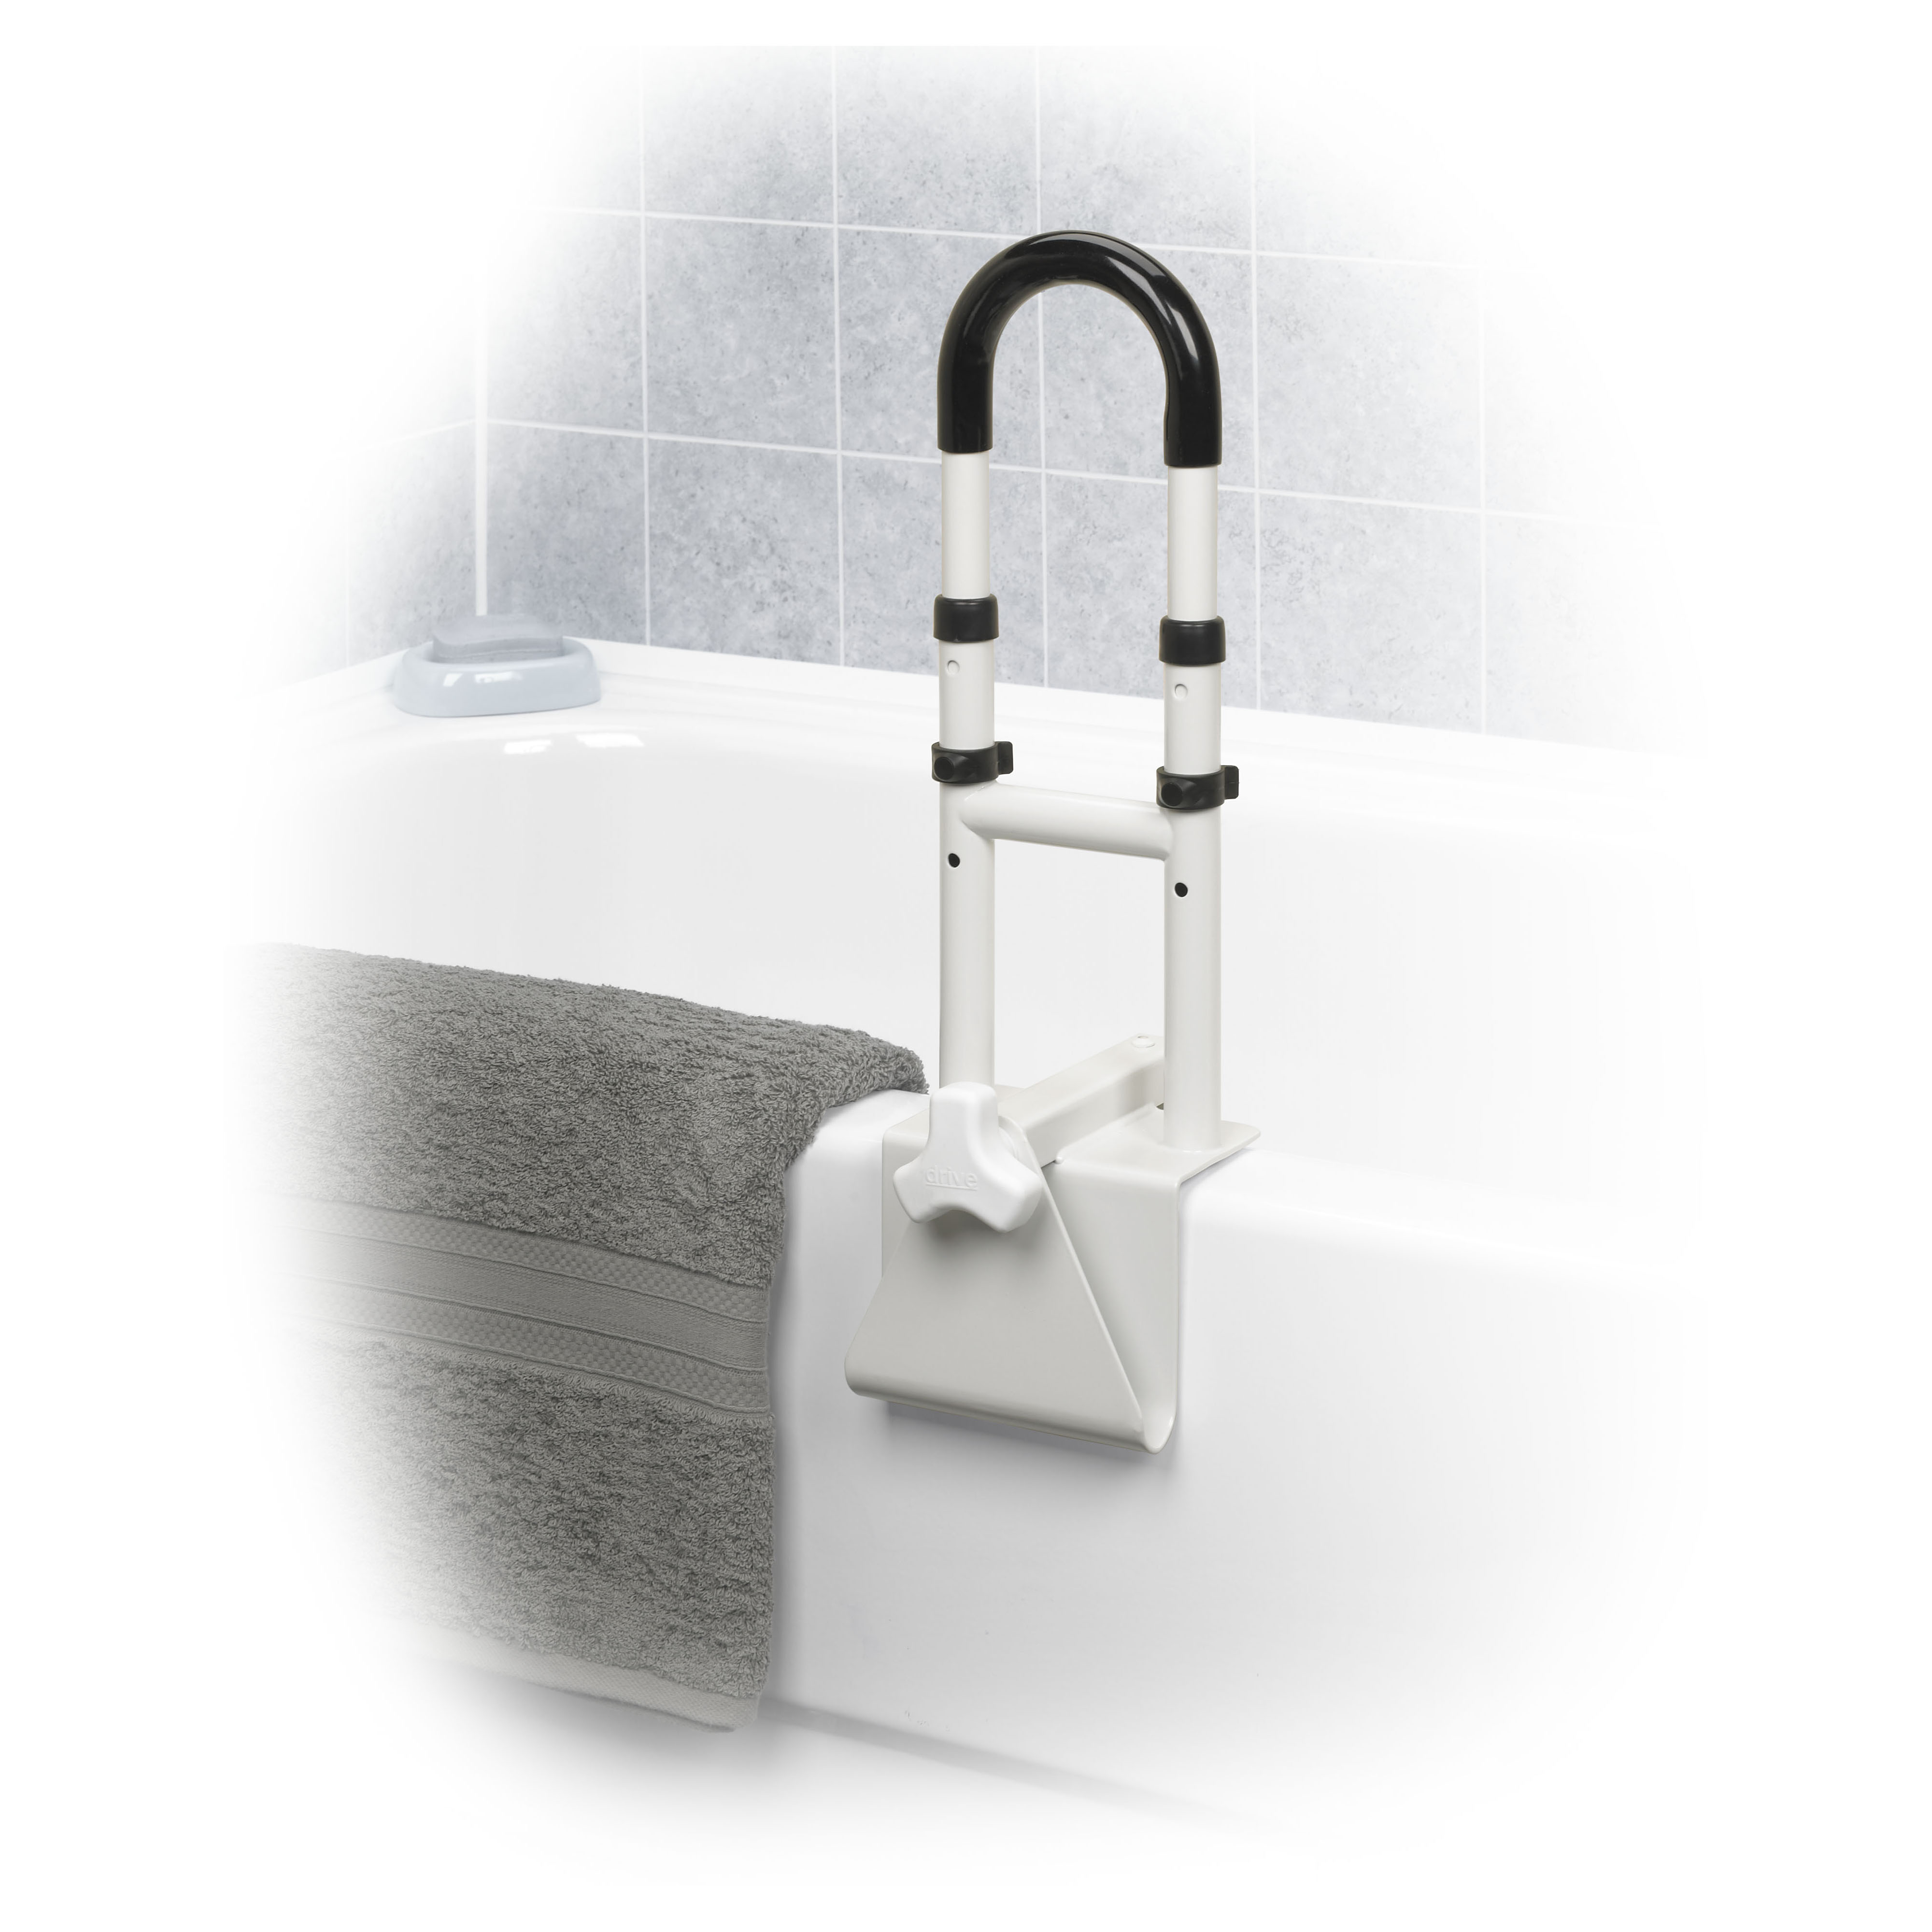 Adjustable Height Bathtub Grab Bar Safety Rail Leika pertaining to size 4000 X 4000